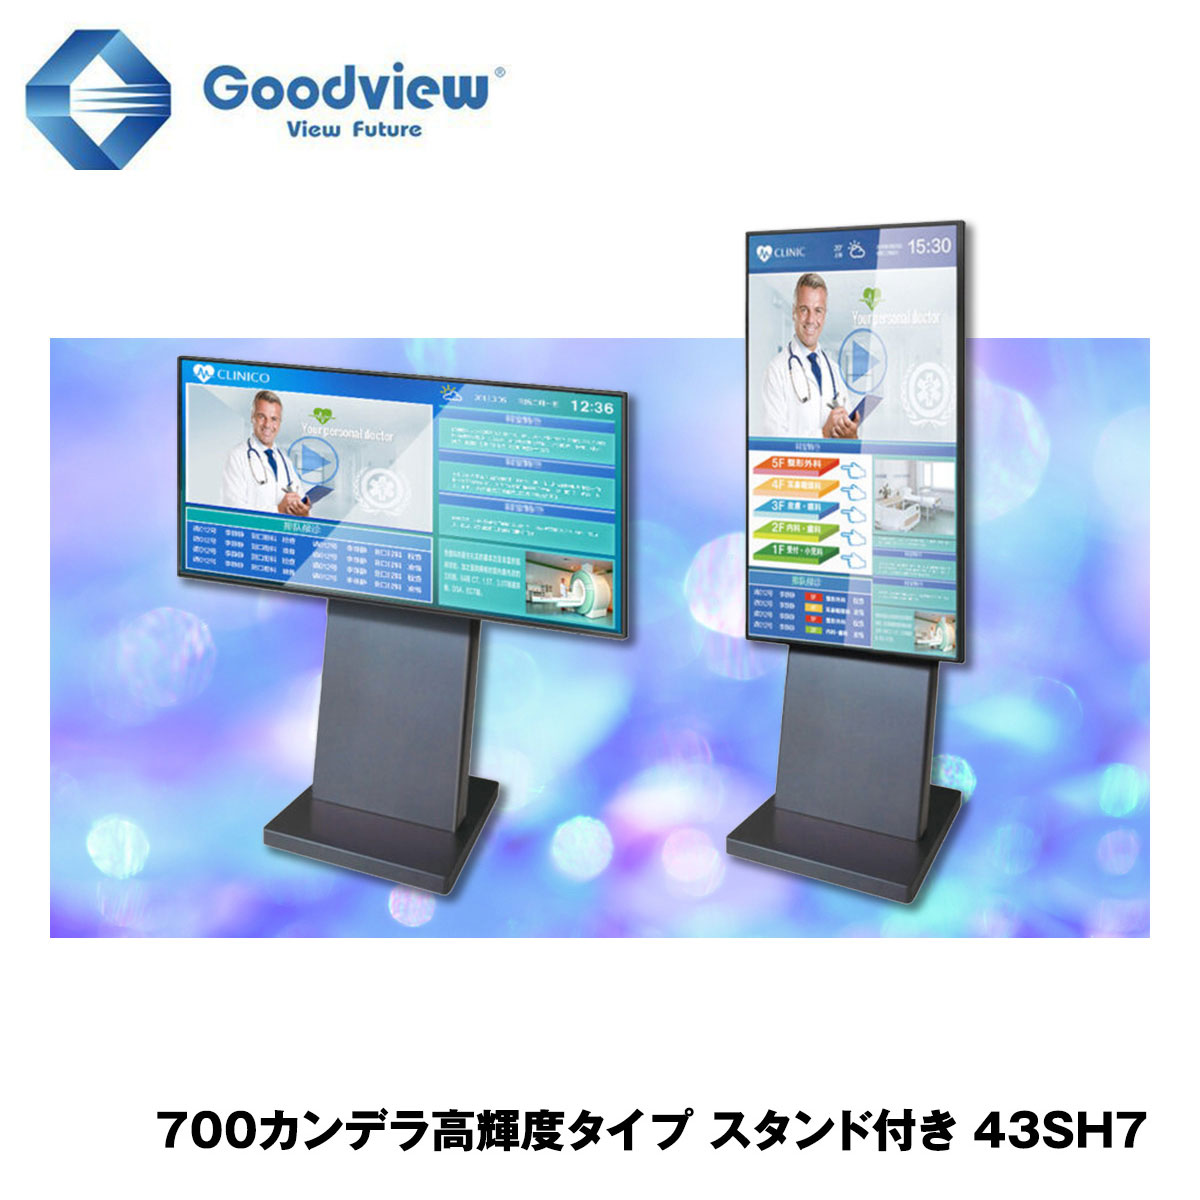 Goodview デジタルサイネージ 高輝度タイプ 自立式スタンドセット 700カンデラ 43型【43SH7】